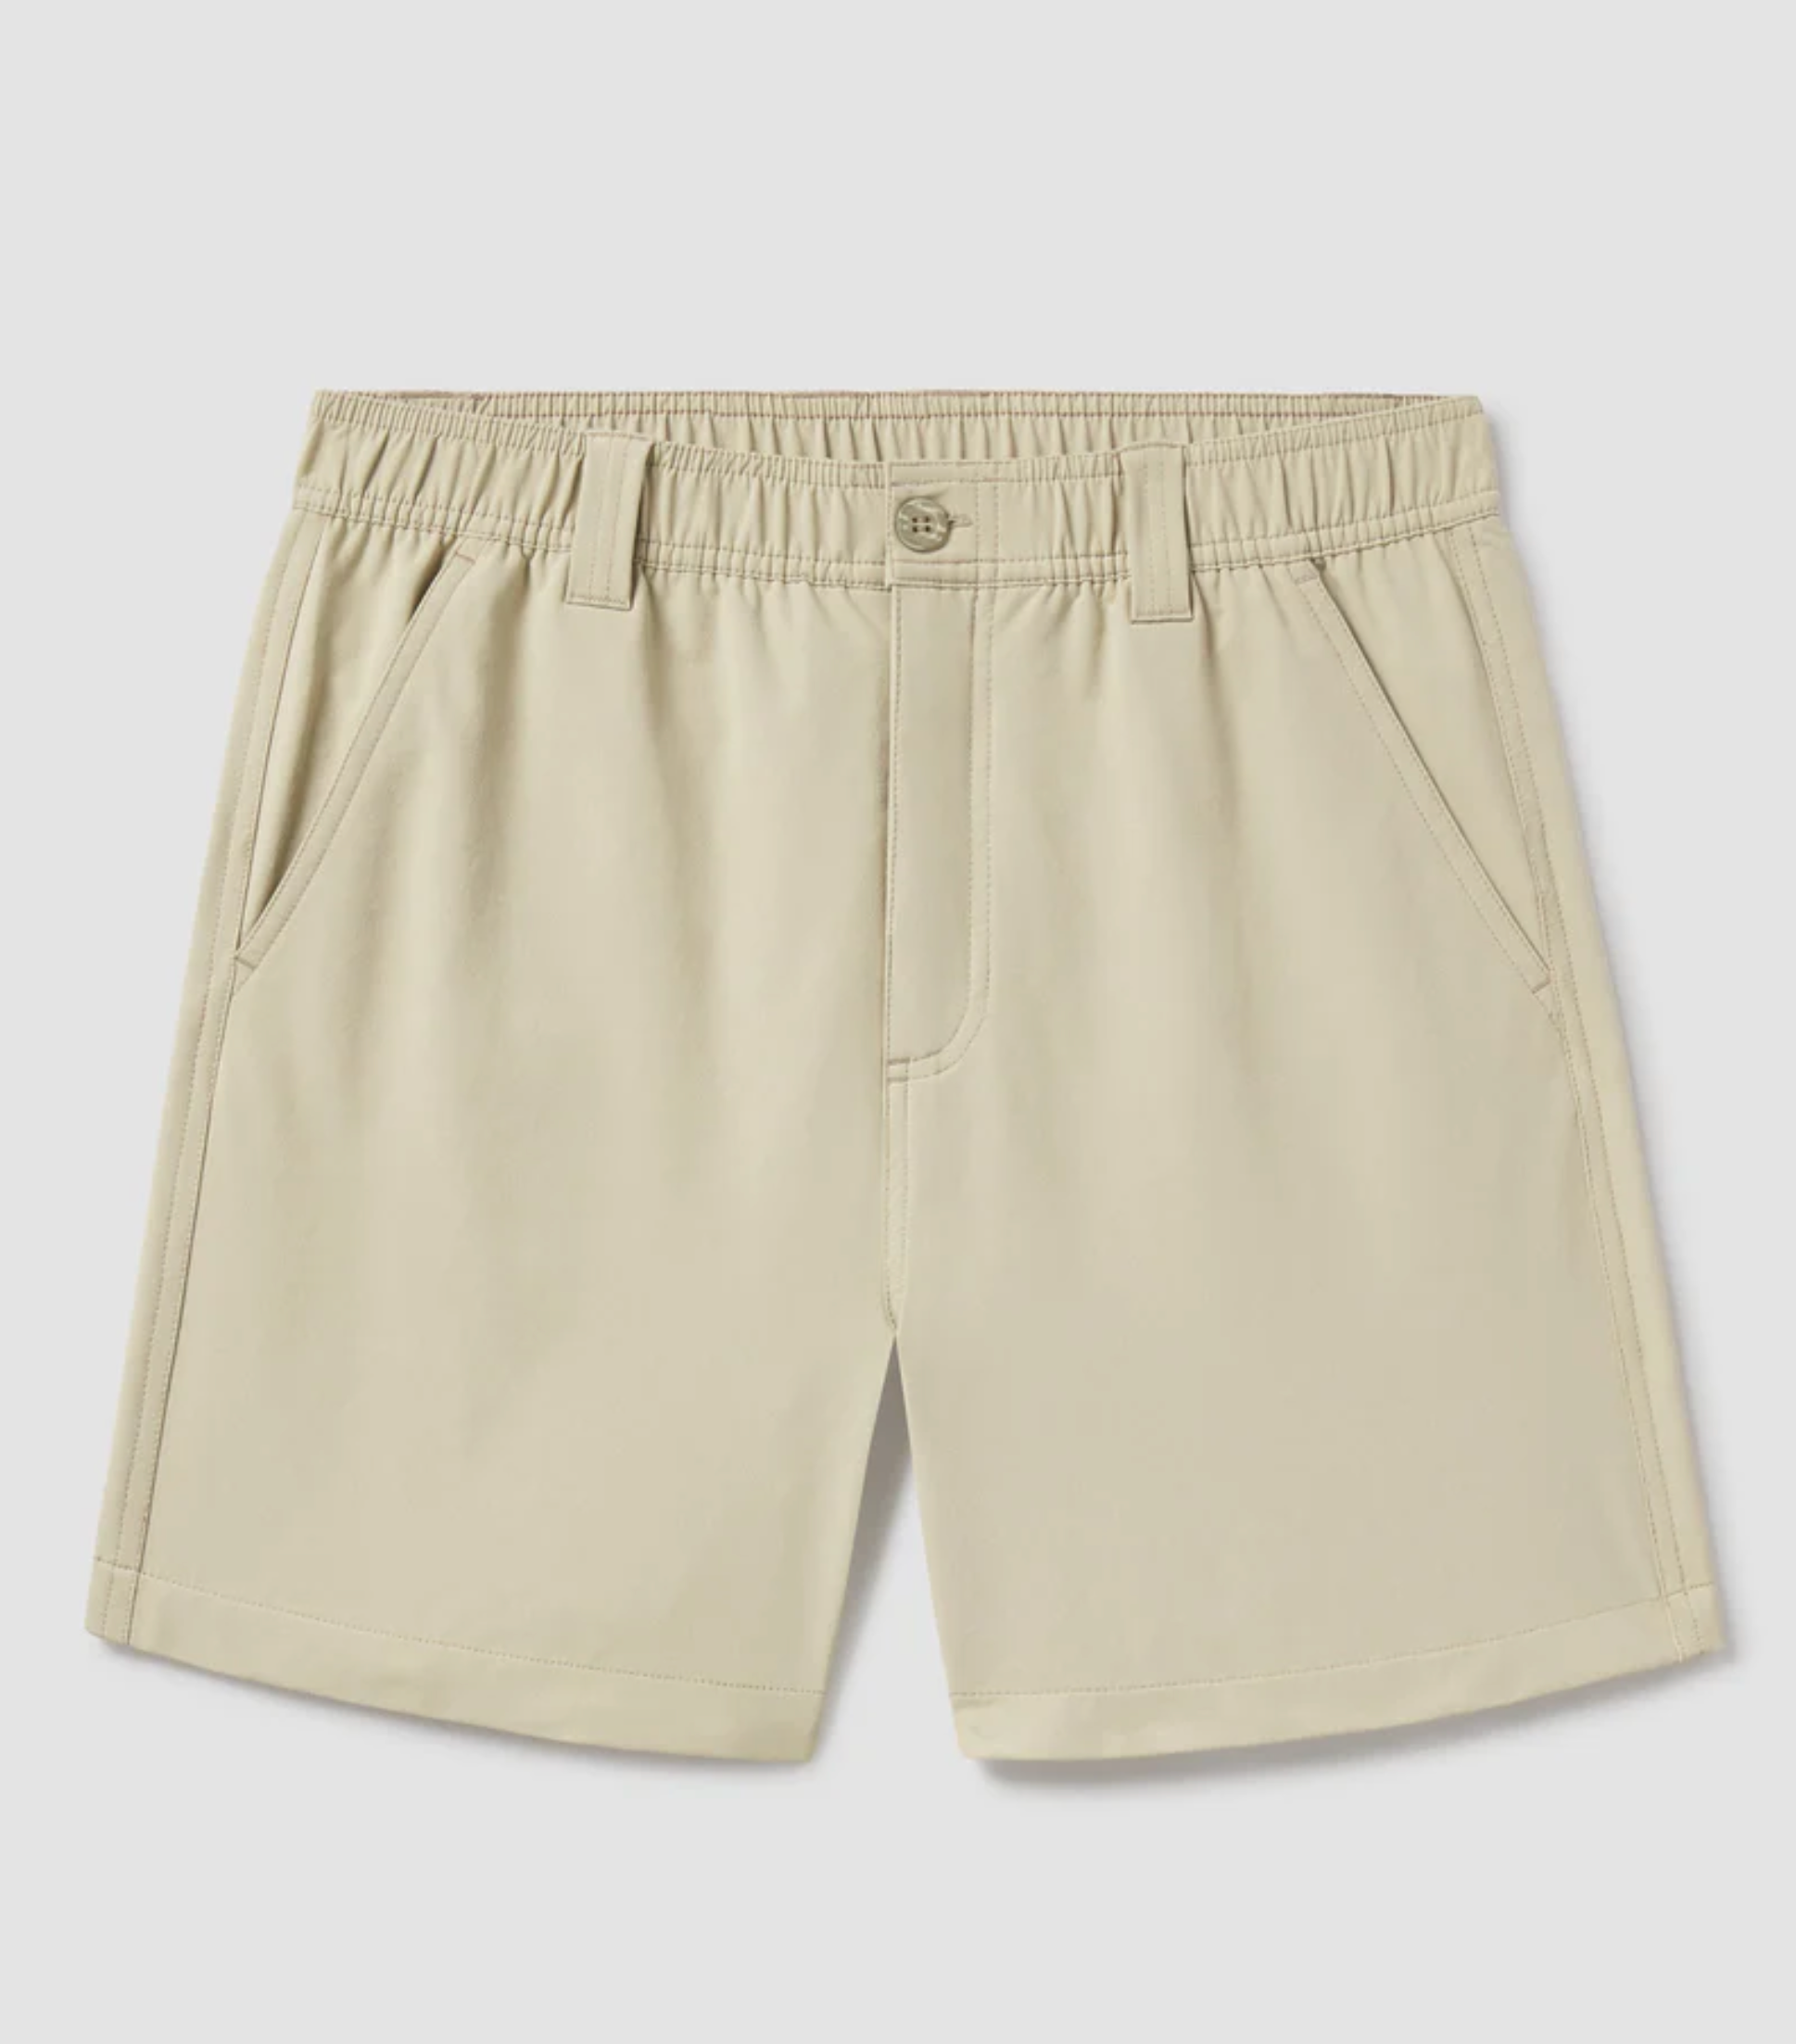 Southern Shirt - Everyday Hybrid Shorts - Overcast – Southern